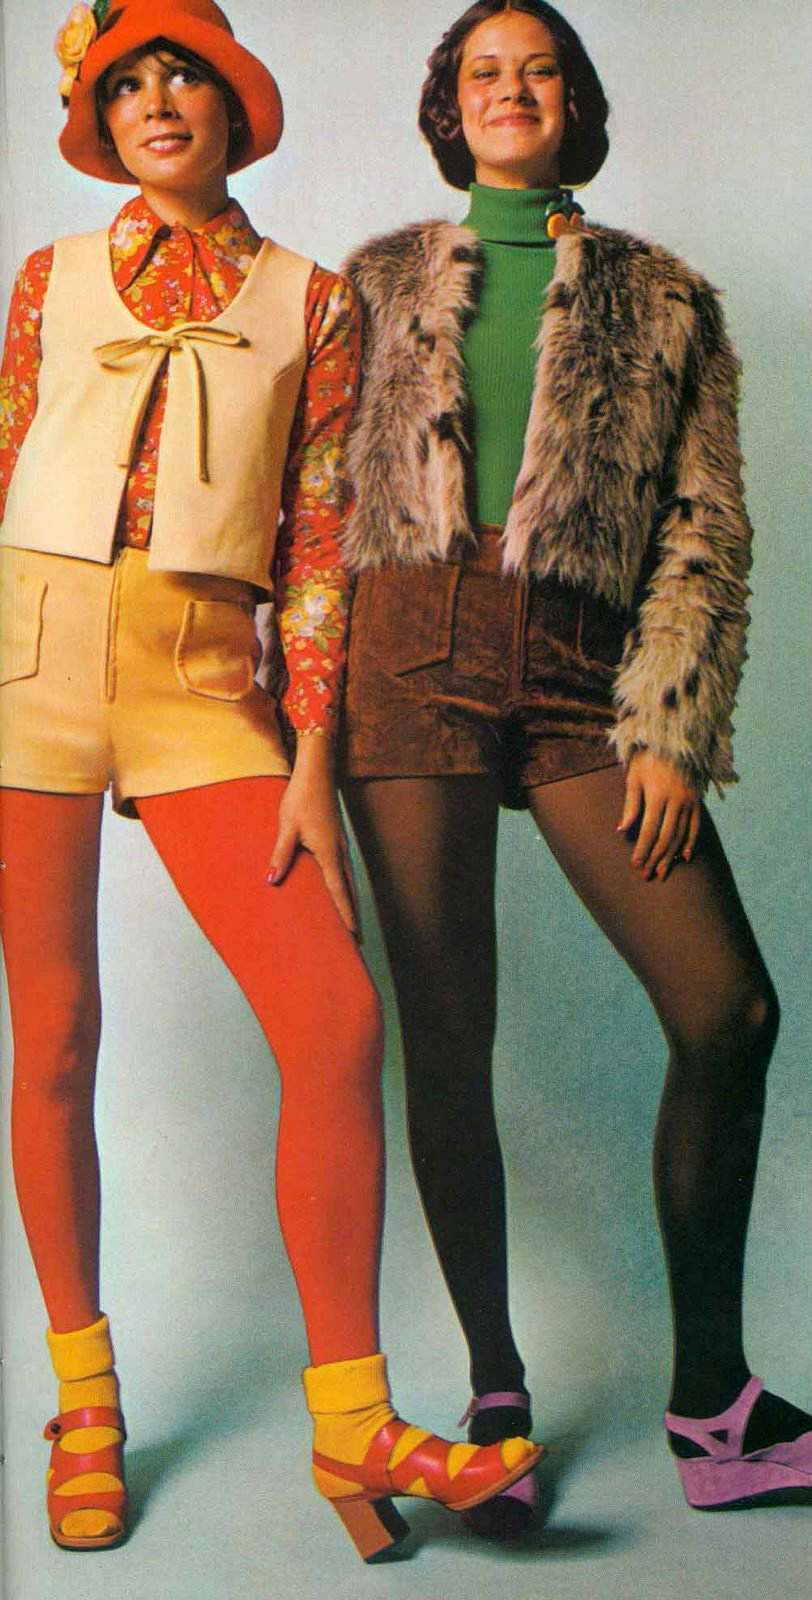 5 Reasons We Should All Love 1970s Fashions - Flashbak